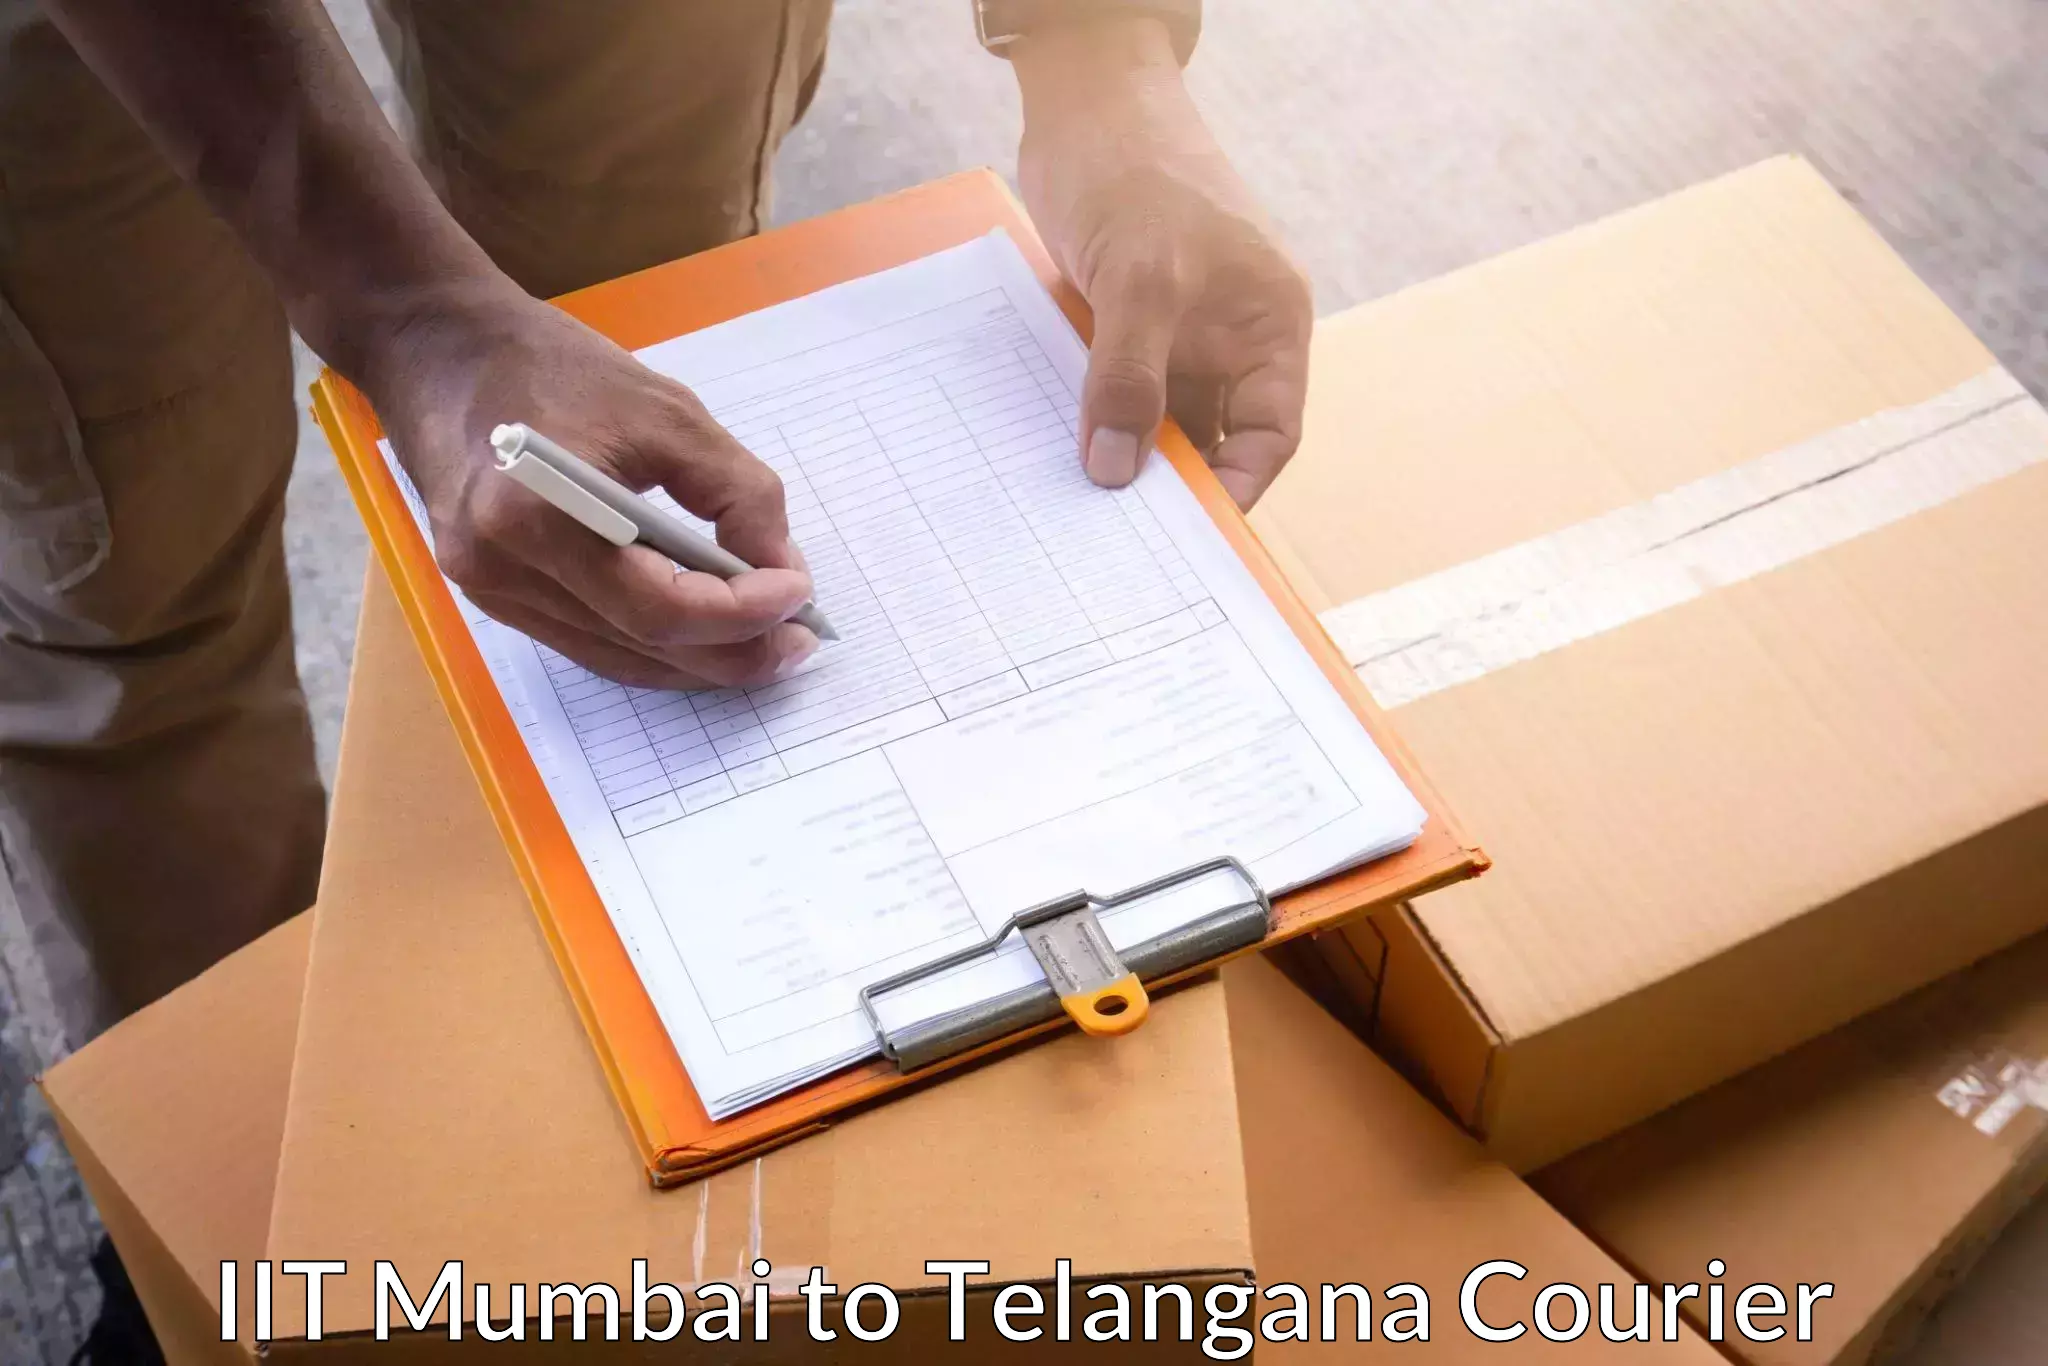 Courier service efficiency IIT Mumbai to Hyderabad